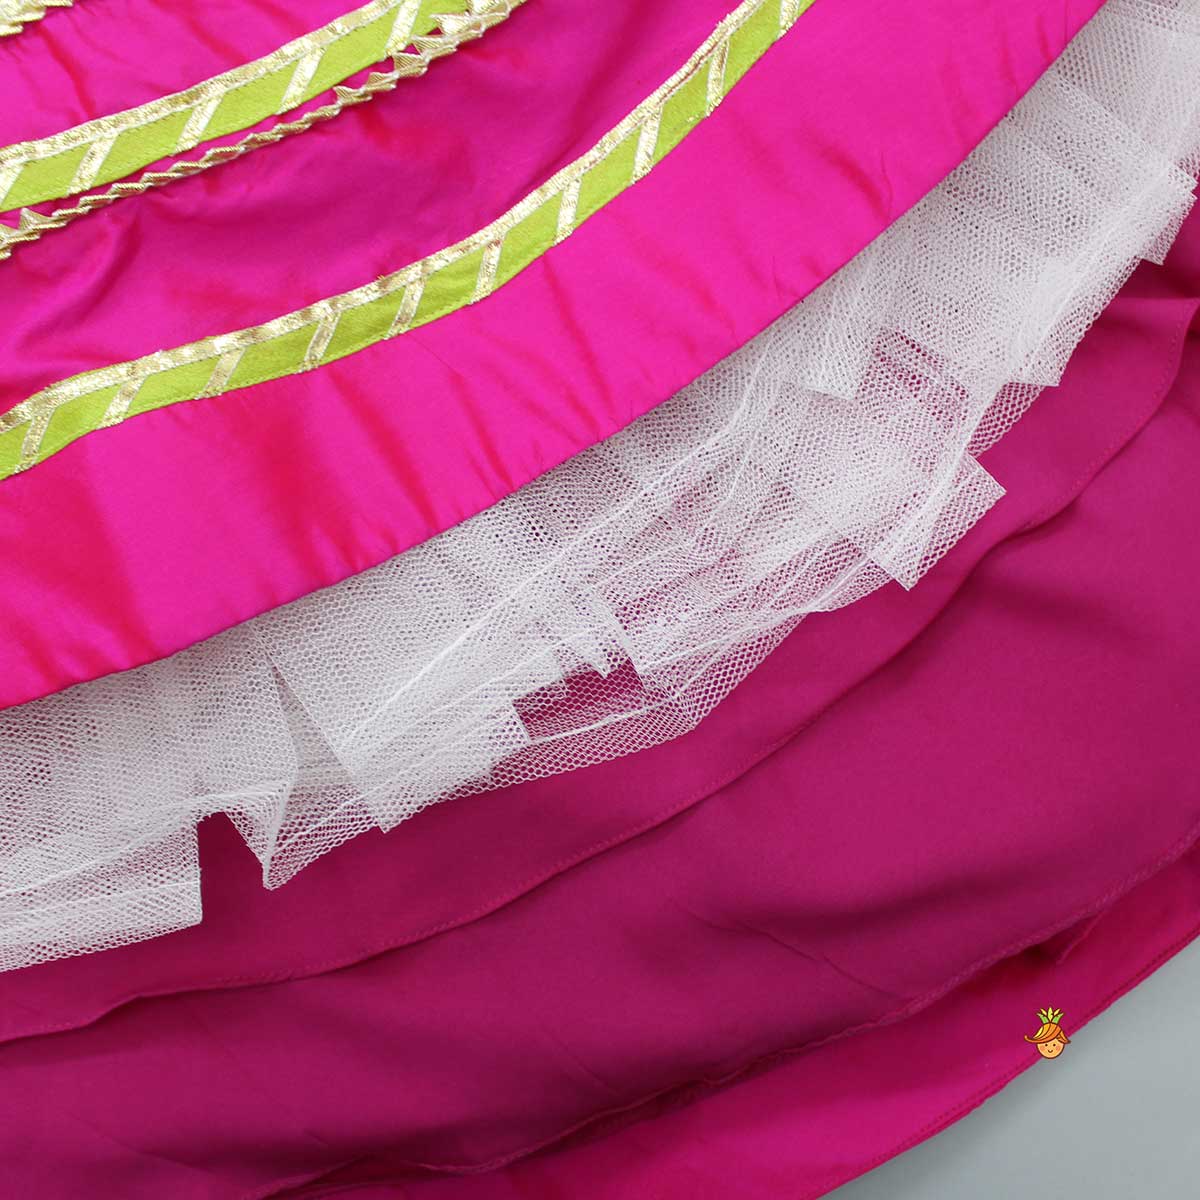 Stylish Cut Out Hem Pink Sleeveless Top And Lehenga With Contrasting Net Dupatta